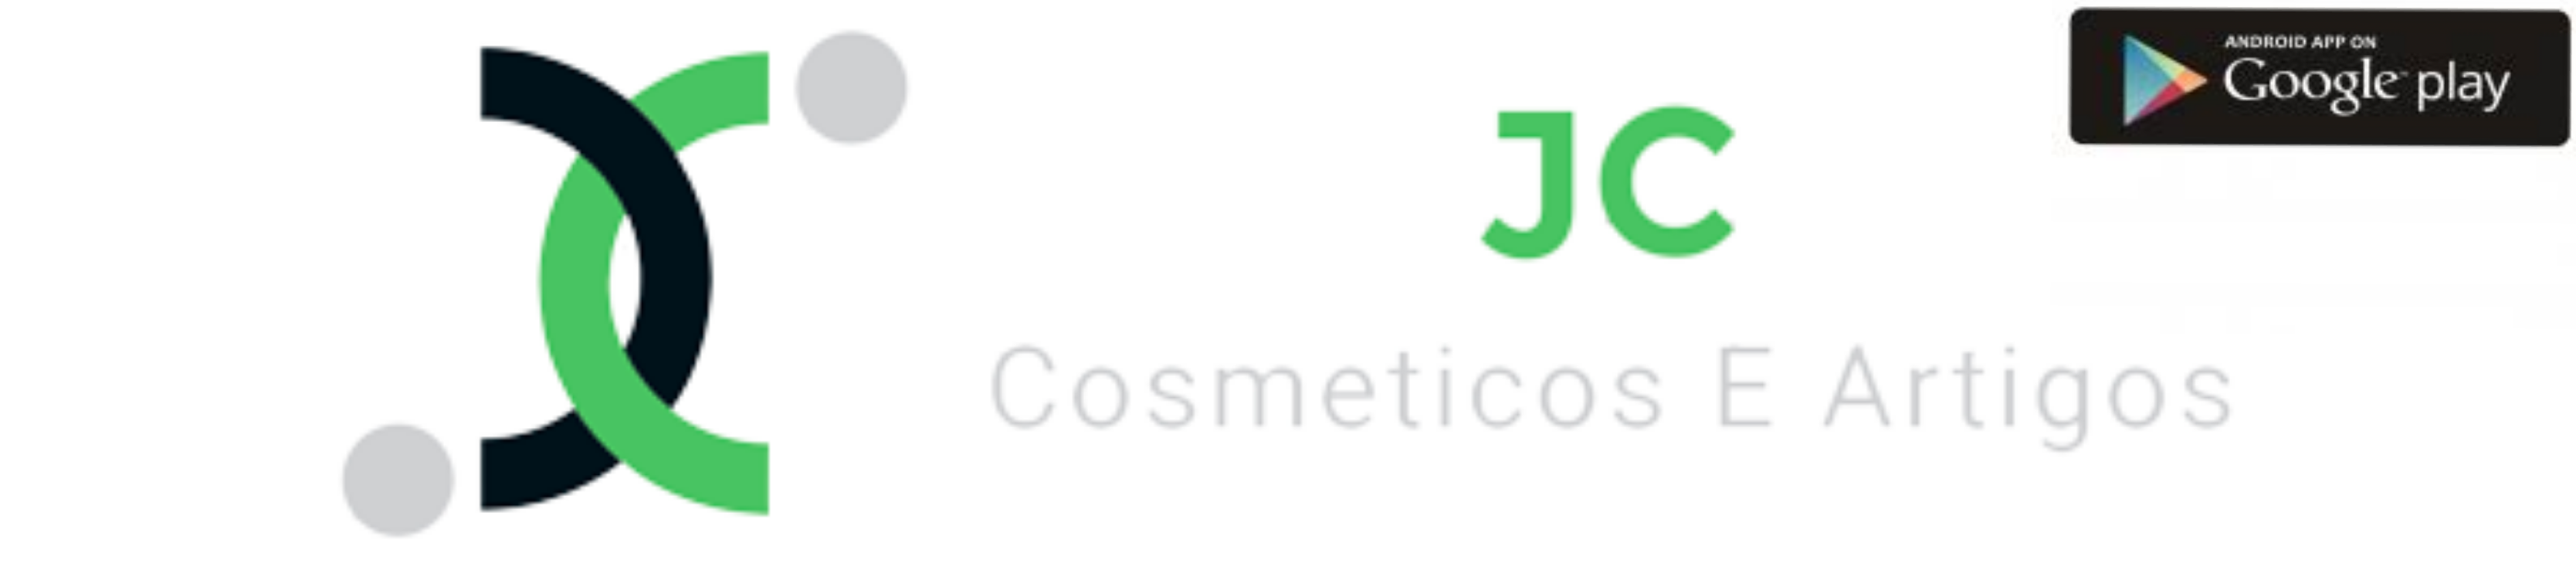 JC Cosmeticos E Artigos